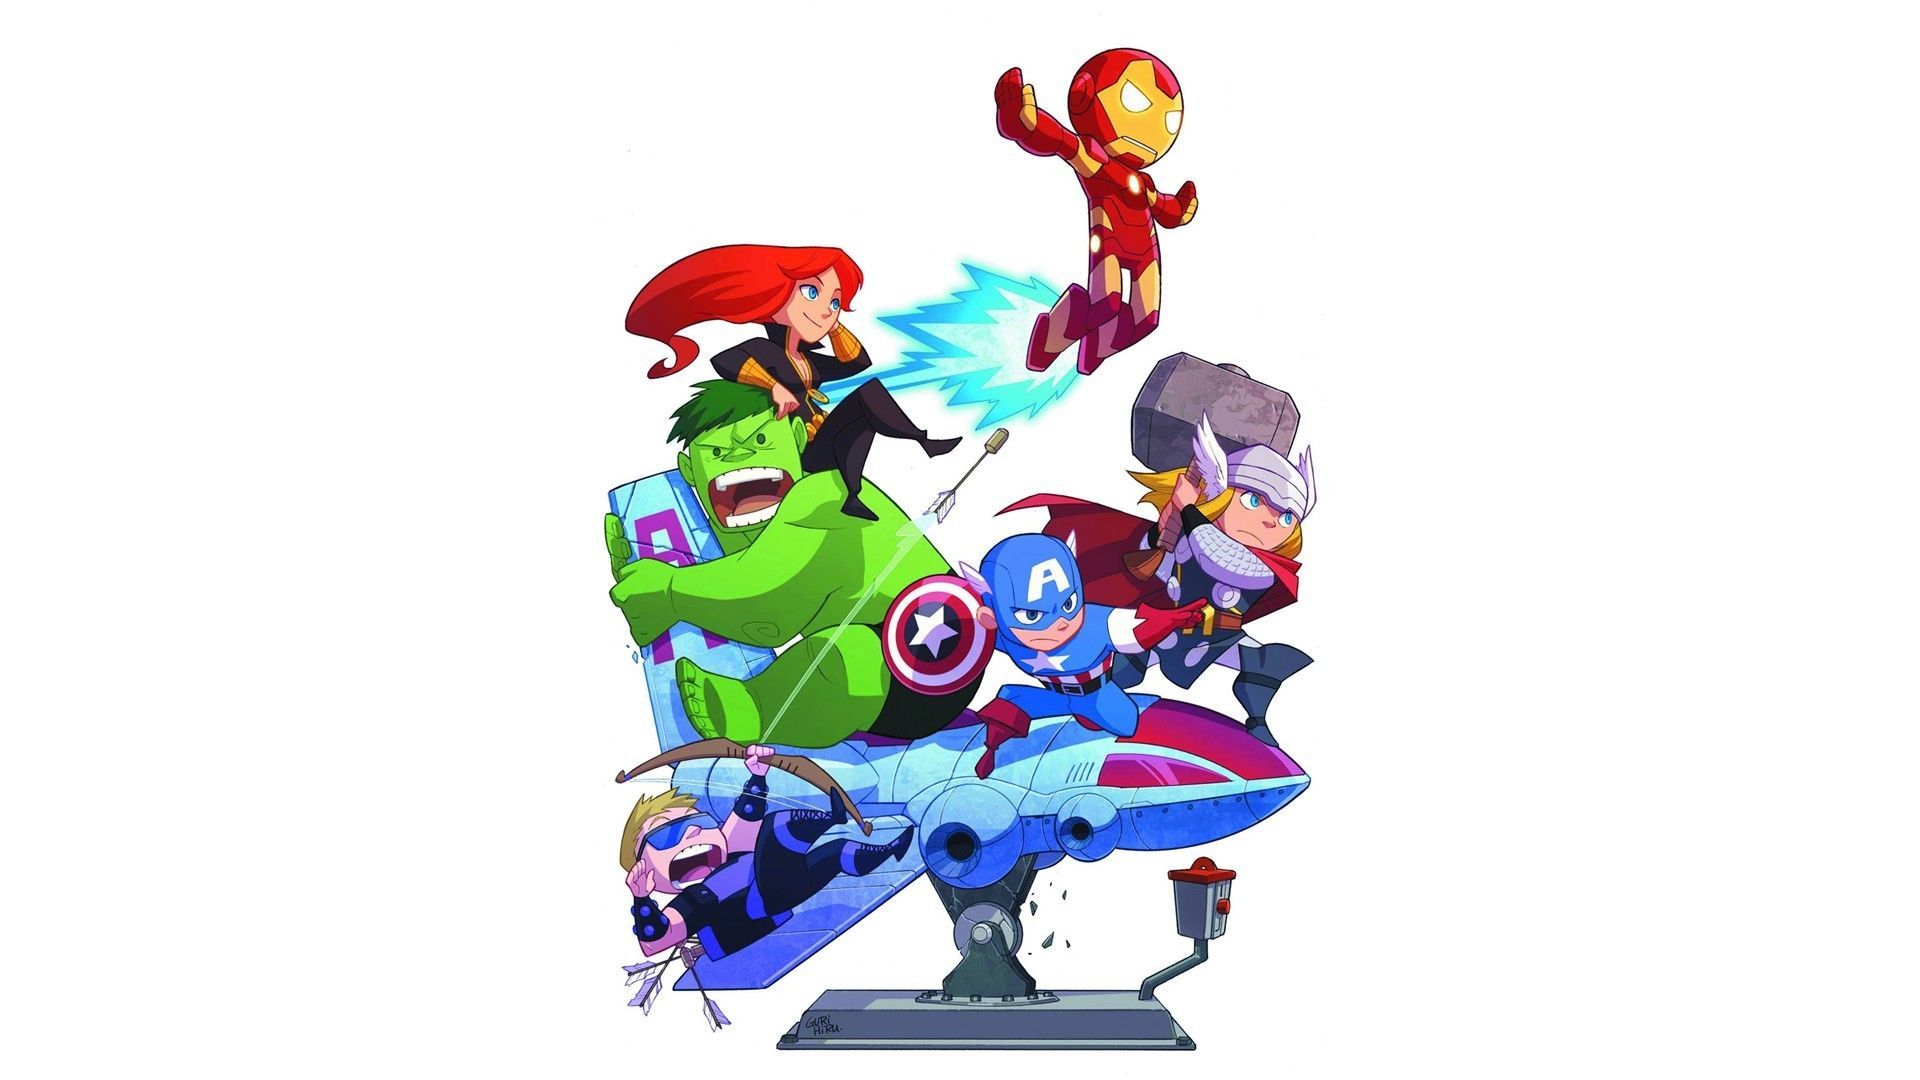 26 Dec 2014_2. Avengers Wallpaper, Marvel Cartoons, Avengers Cartoon